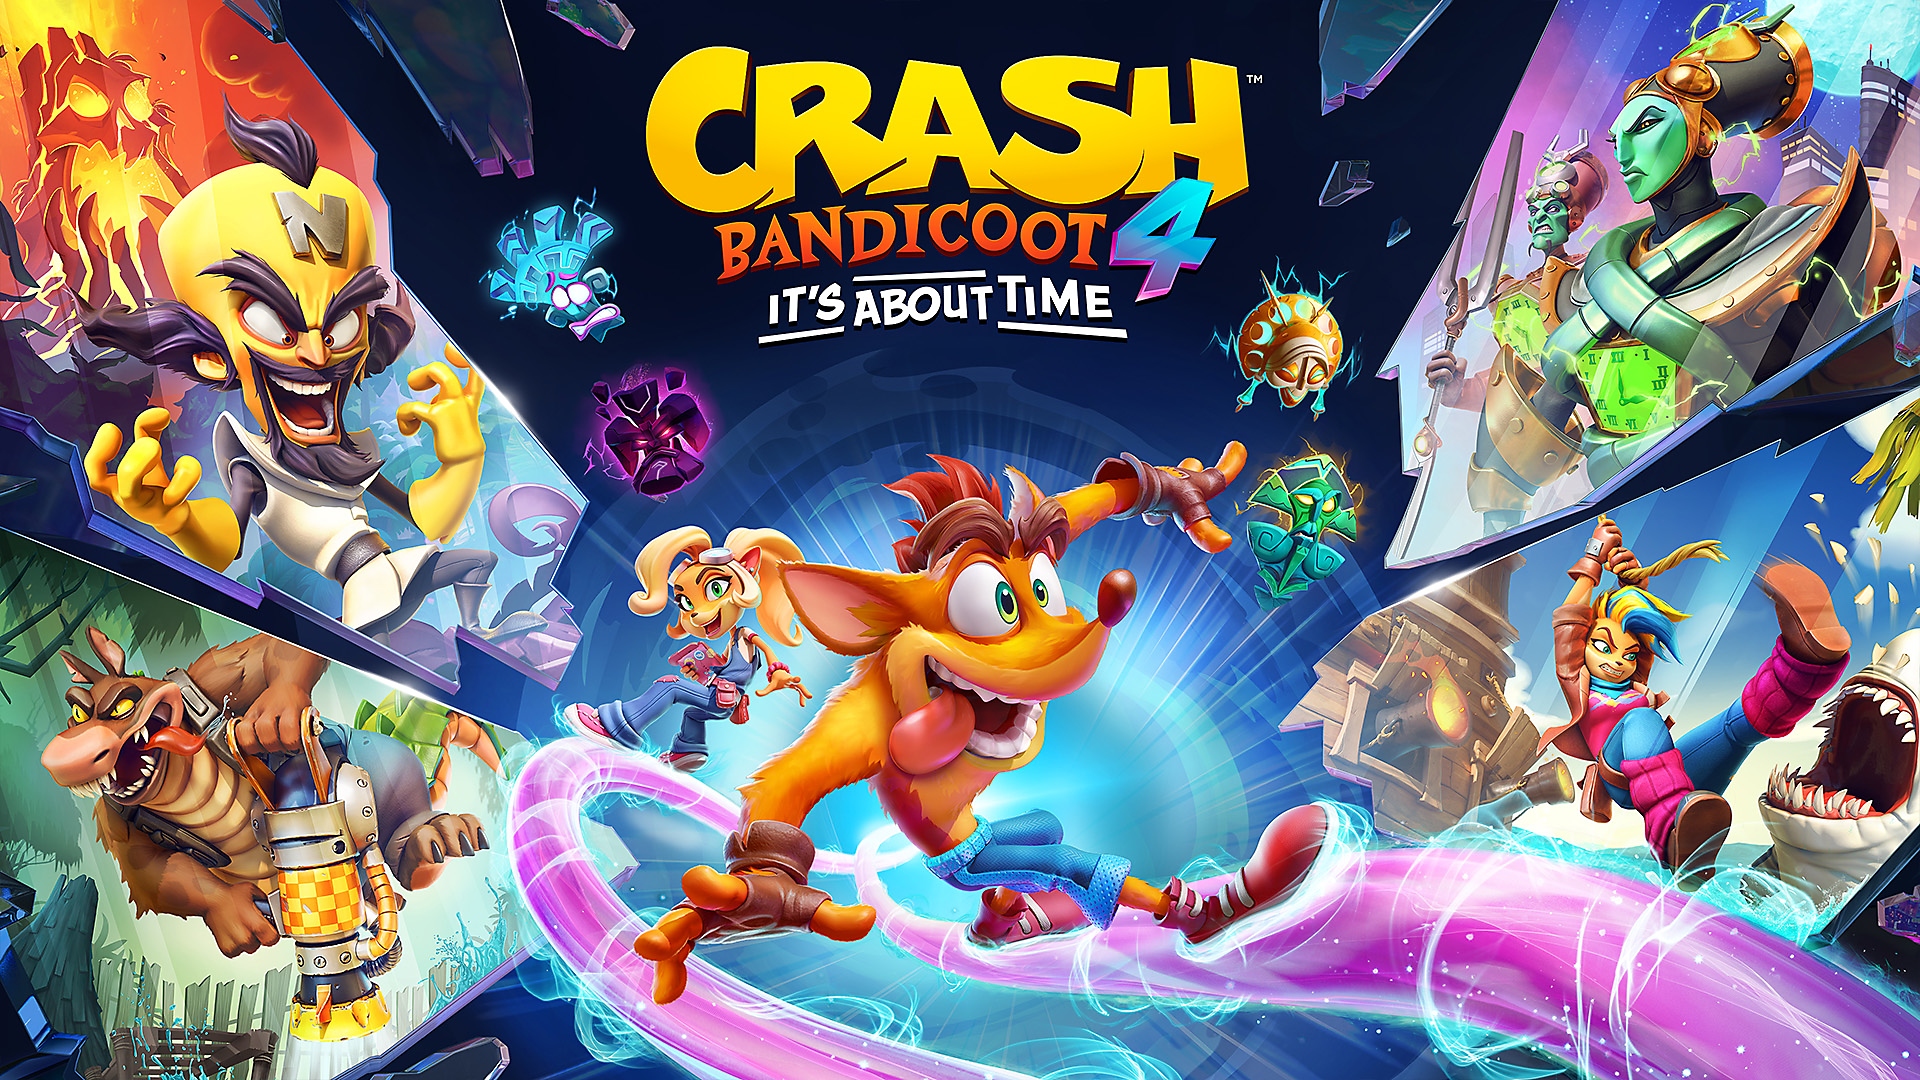 Crash Bandicoot 4: trailer de lansare